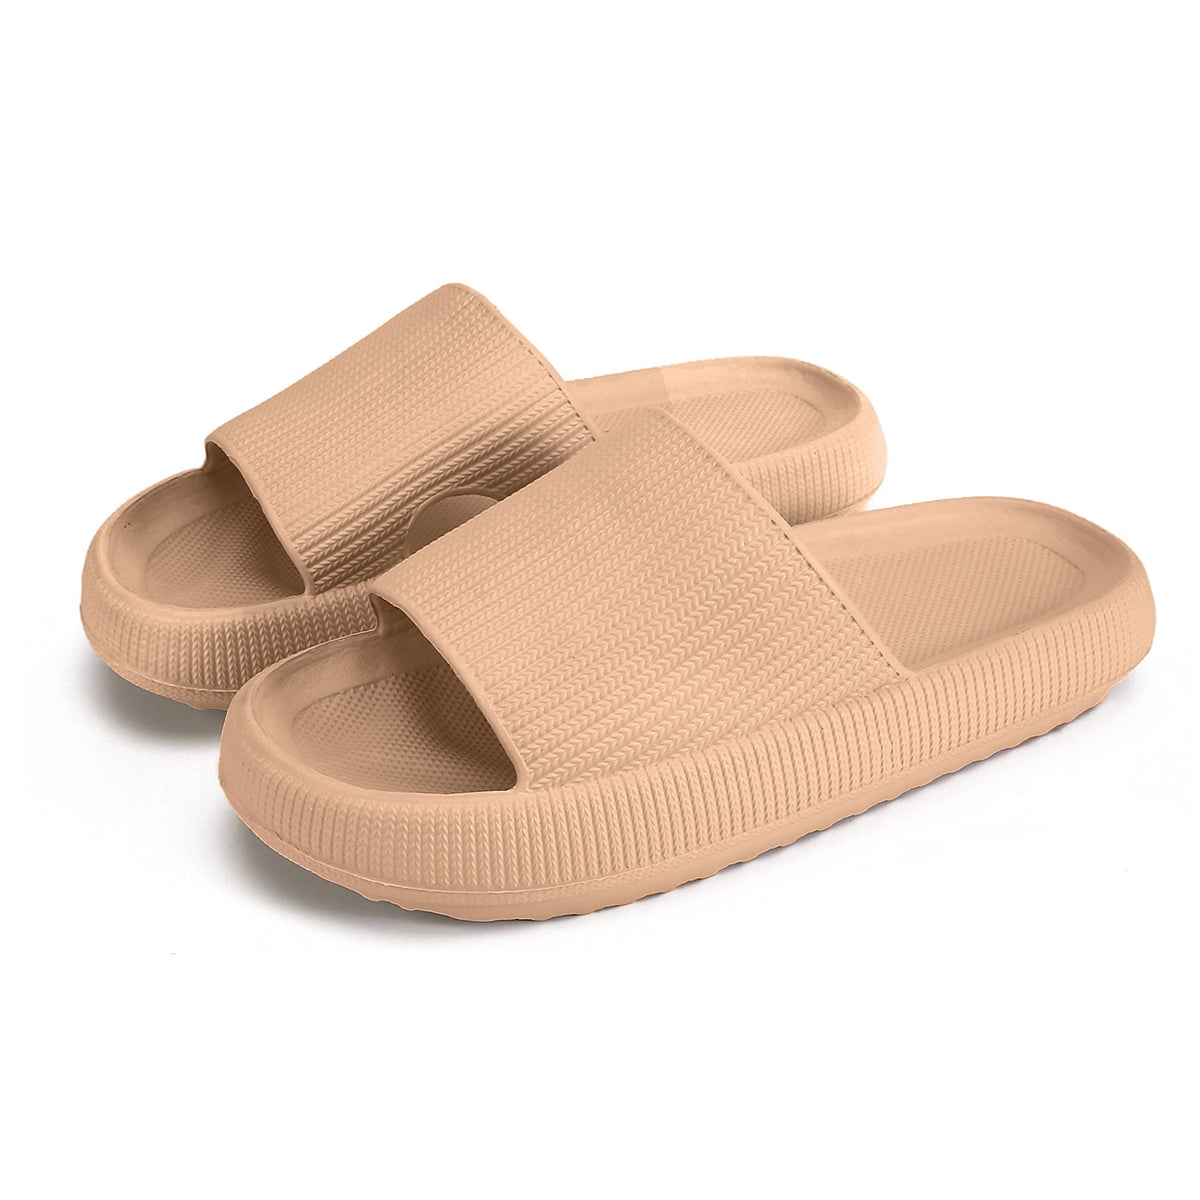 Mens Slides Pillow Sliders Comfy Slip On Casual Sandals Shower Beach Plus Size